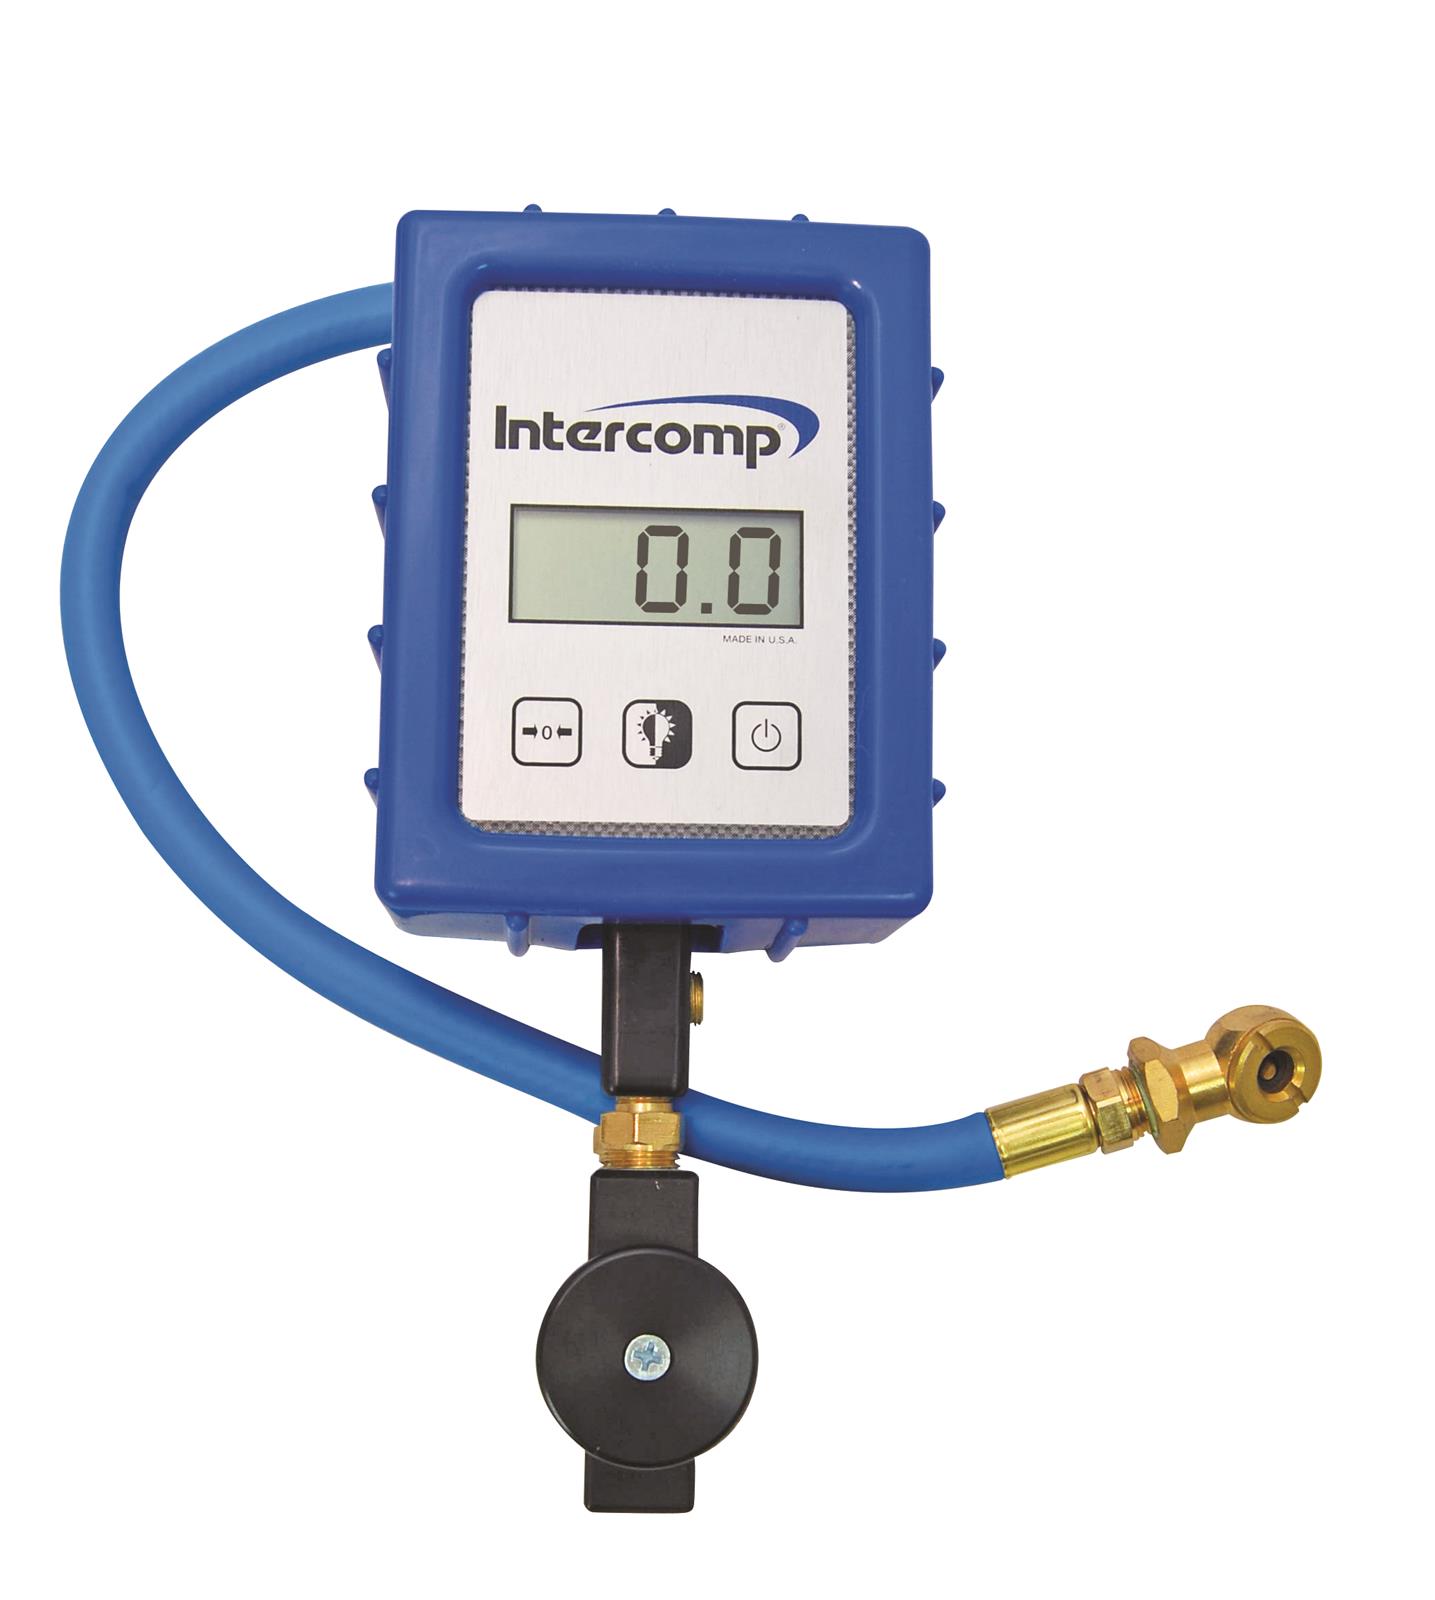 Intercomp Tire Temperature / Humidity Meter